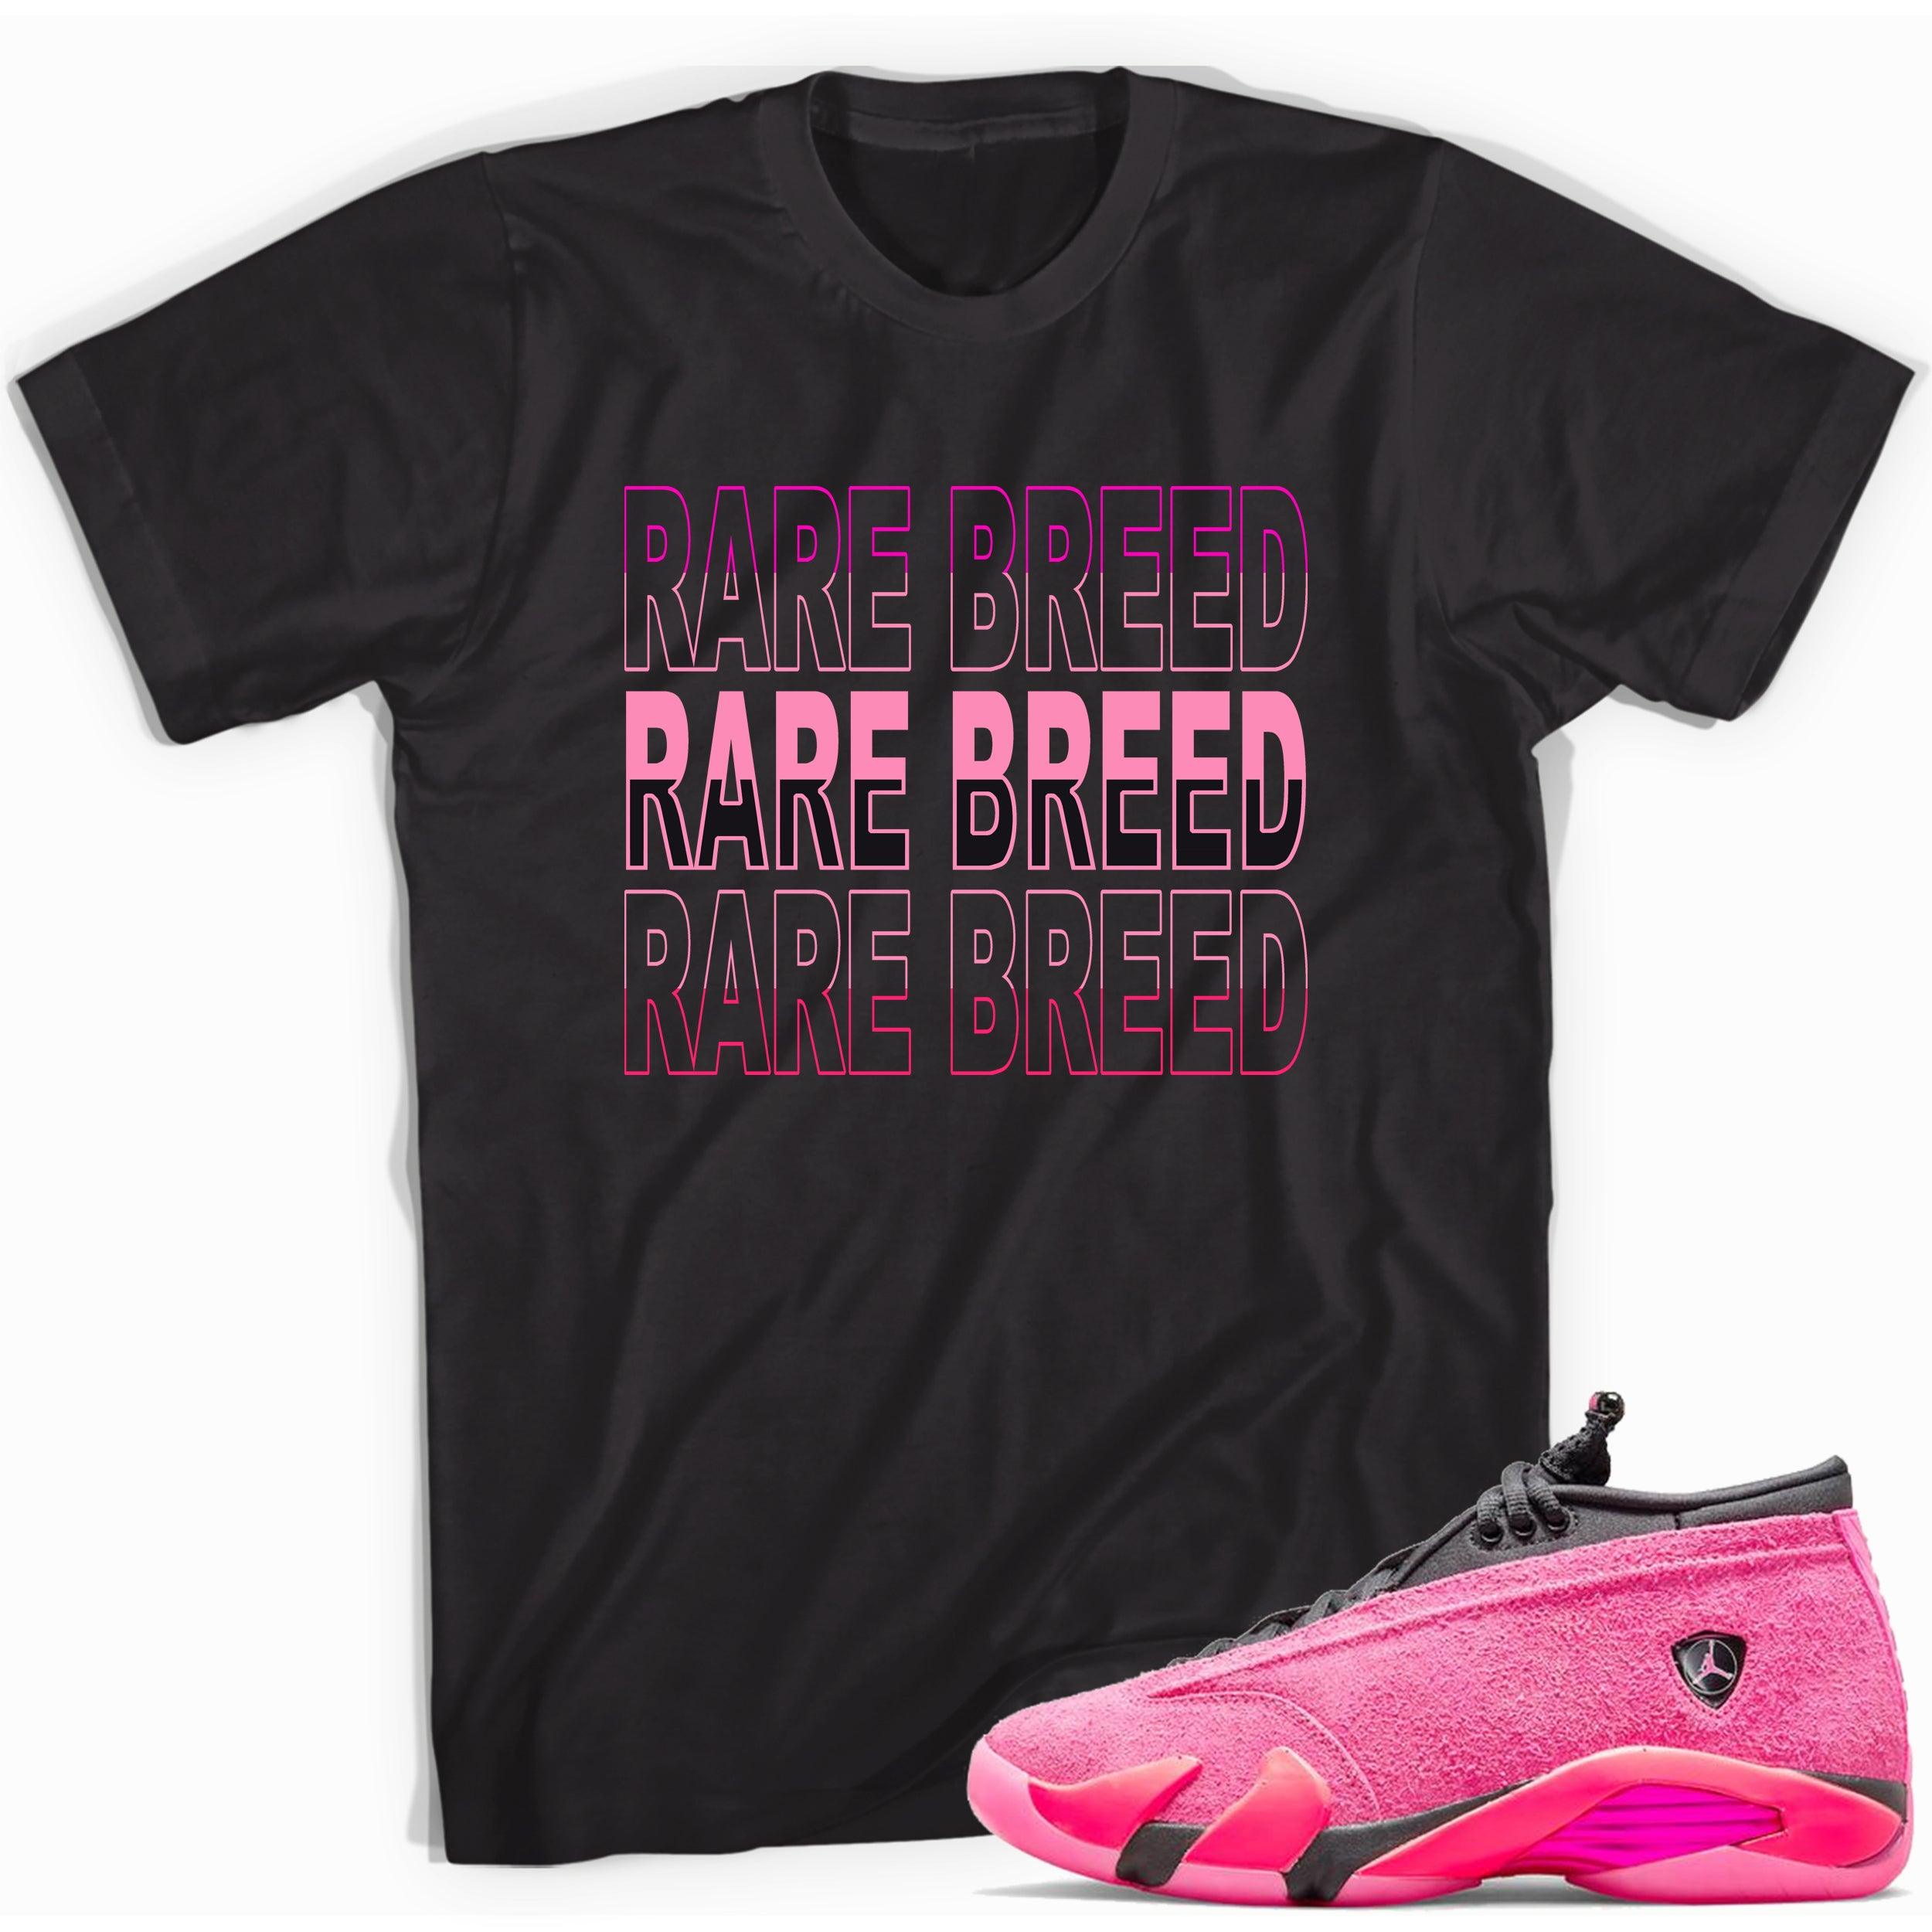 Black Rare Breed Shirt AJ 14s Low Shocking Pink photo